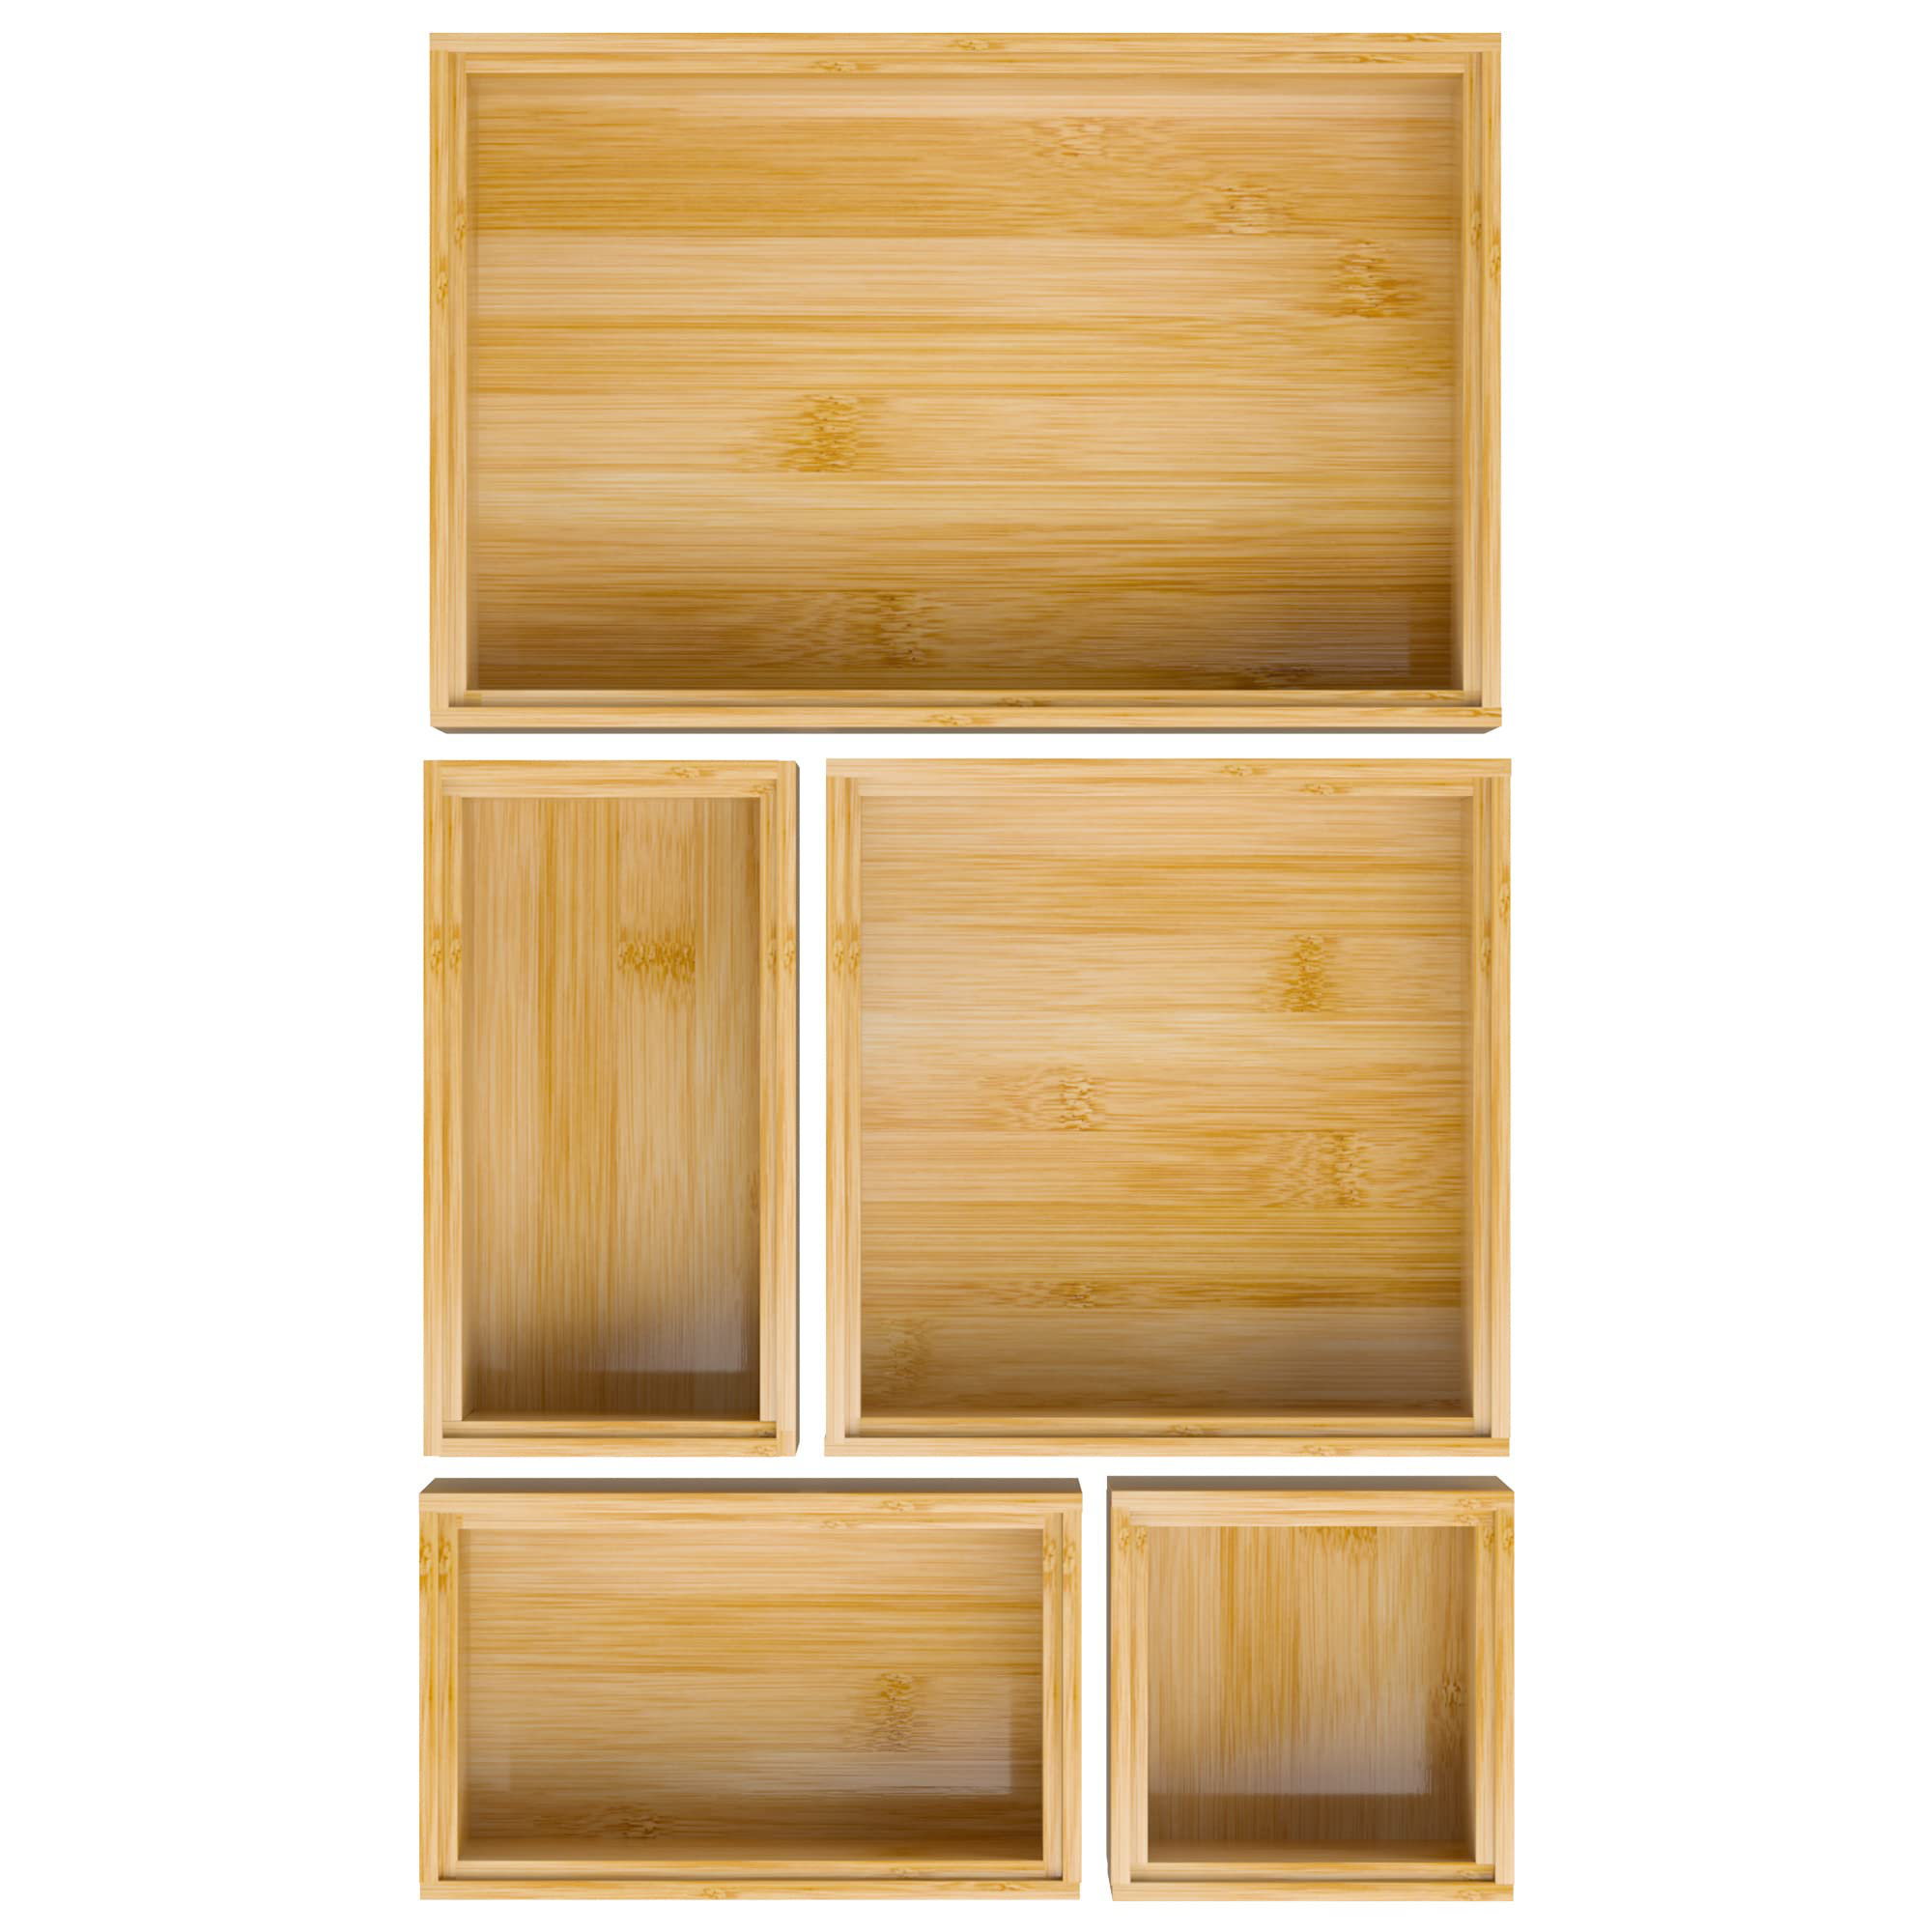 Bamboo Drawer Organizer Storage Box/Bin Set - 5-Piece Multi-use Drawer  Organizer for Kitchen, Bathroom, Office Desk, Makeup, Jewelry